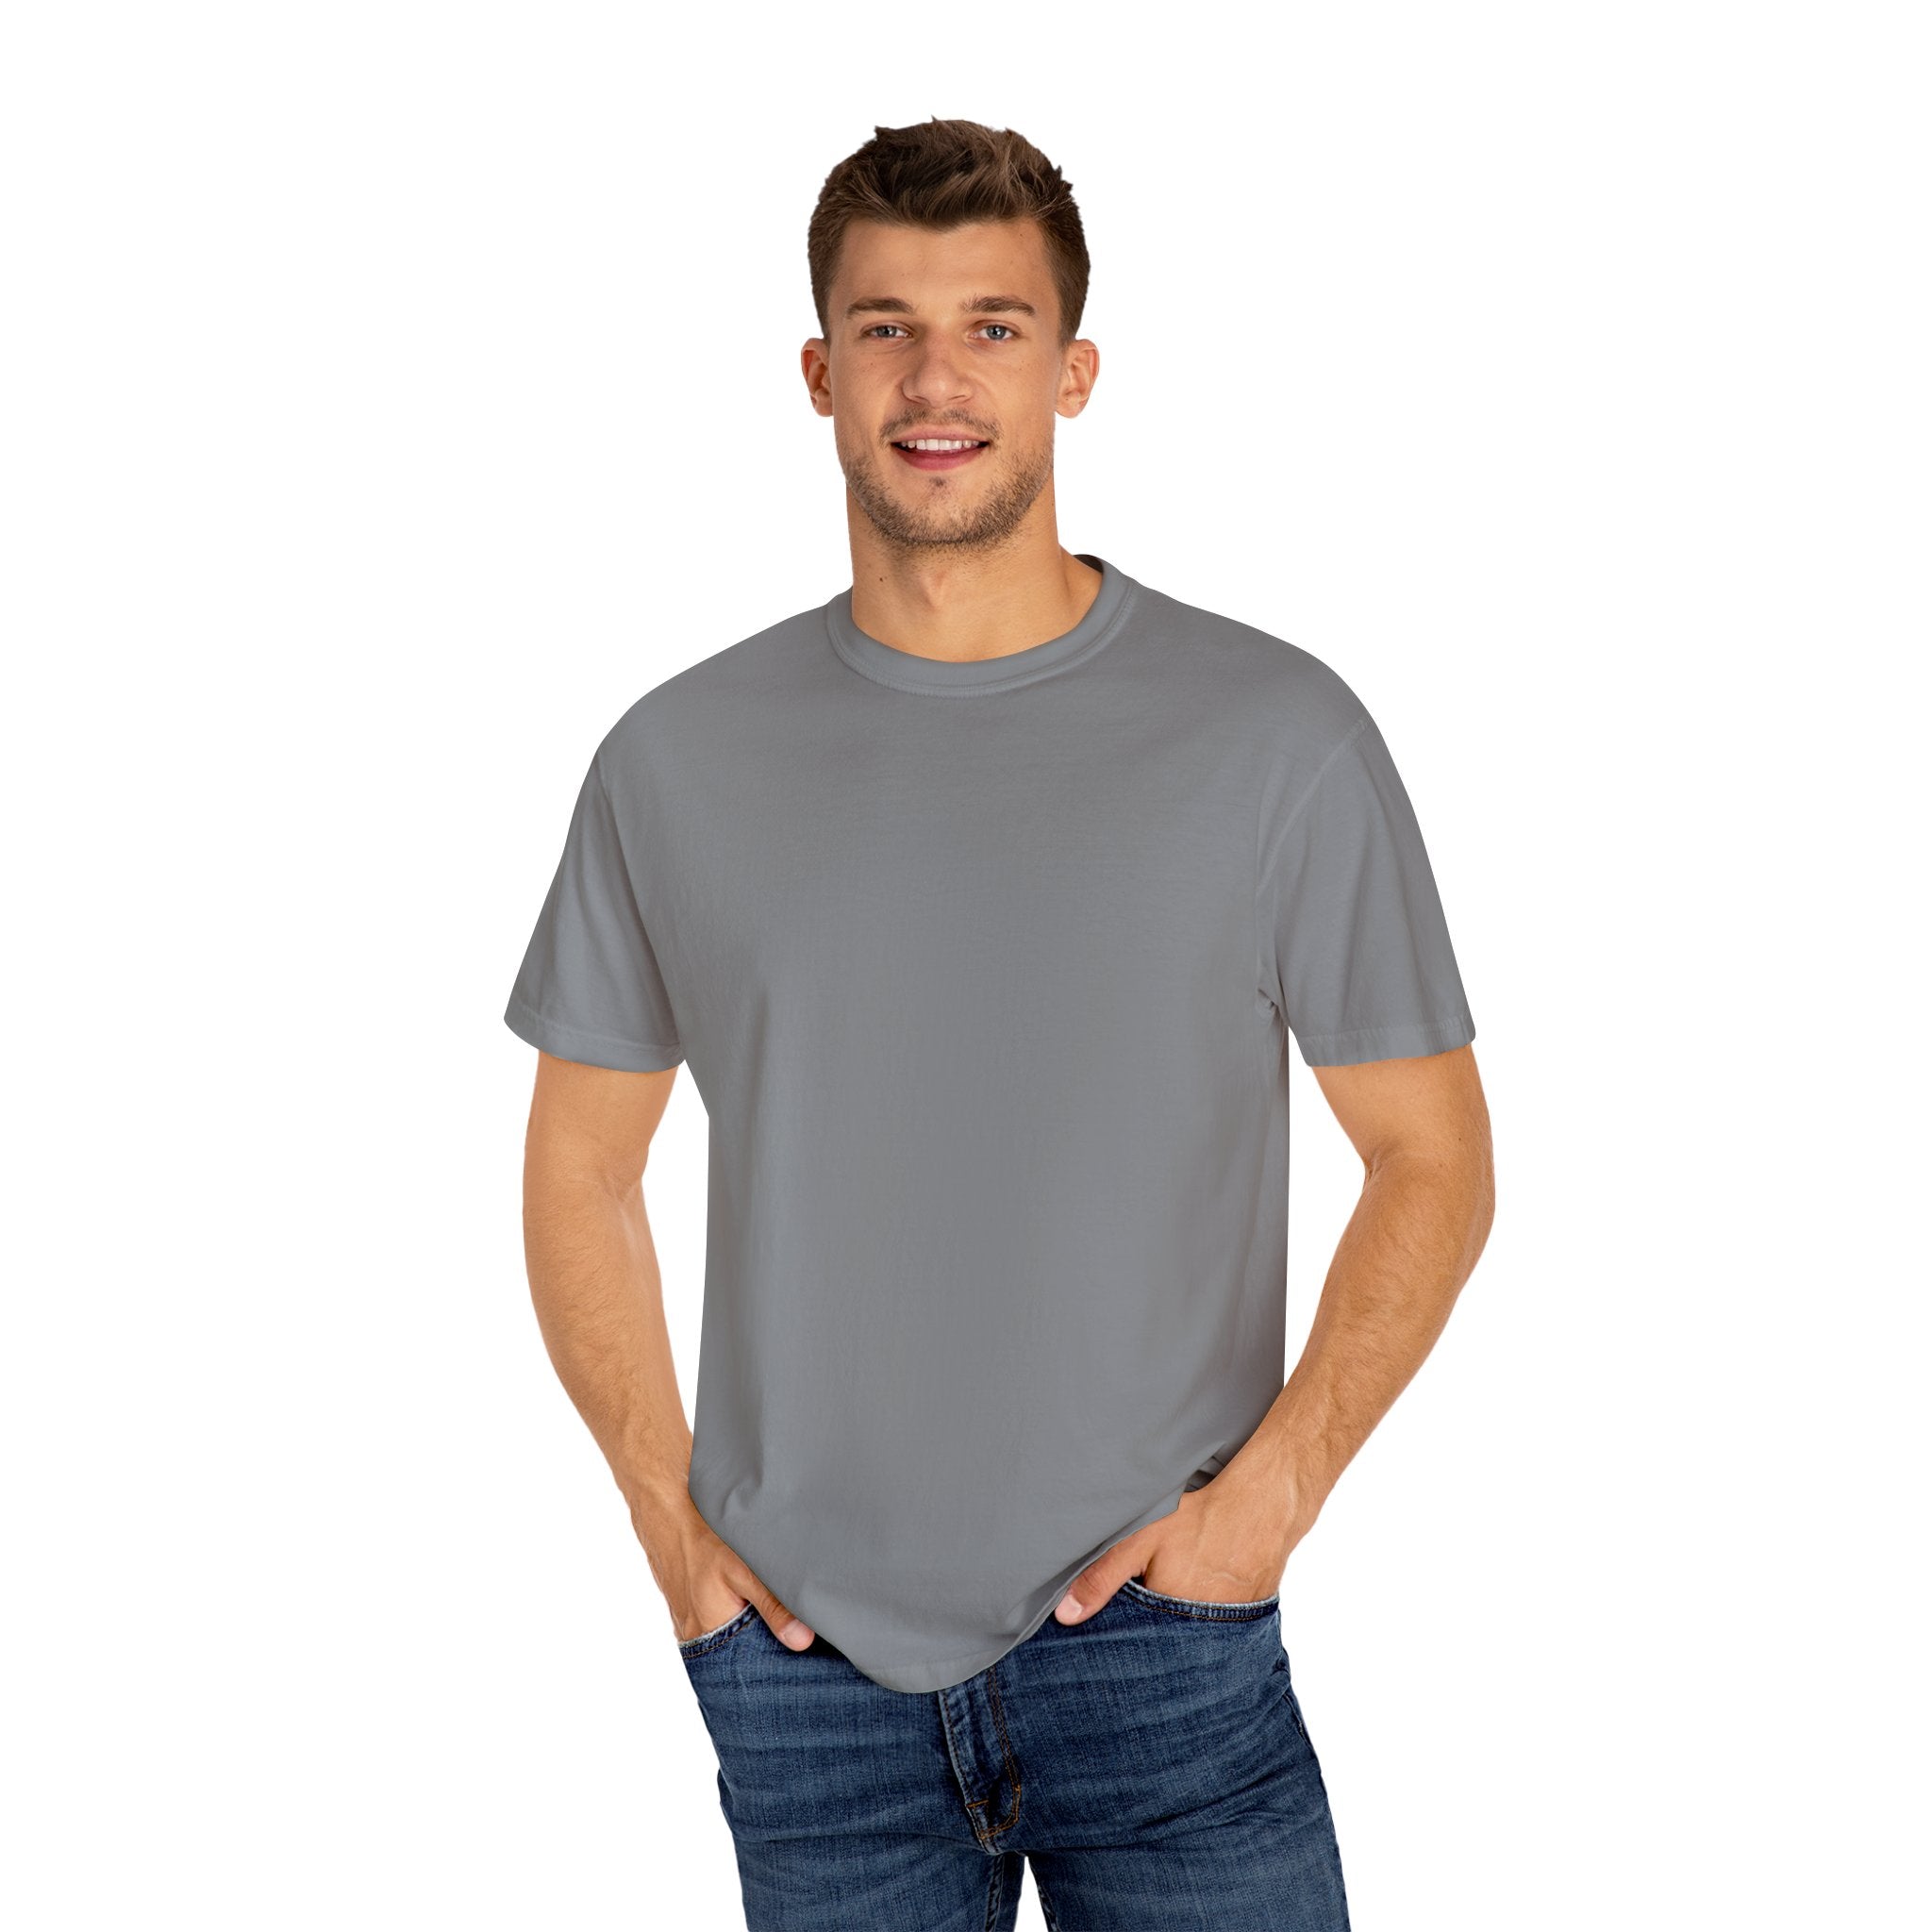 Gotcha Bug: 'Is There Something on My Back?' - Humorous Unisex Garment-Dyed T-Shirt